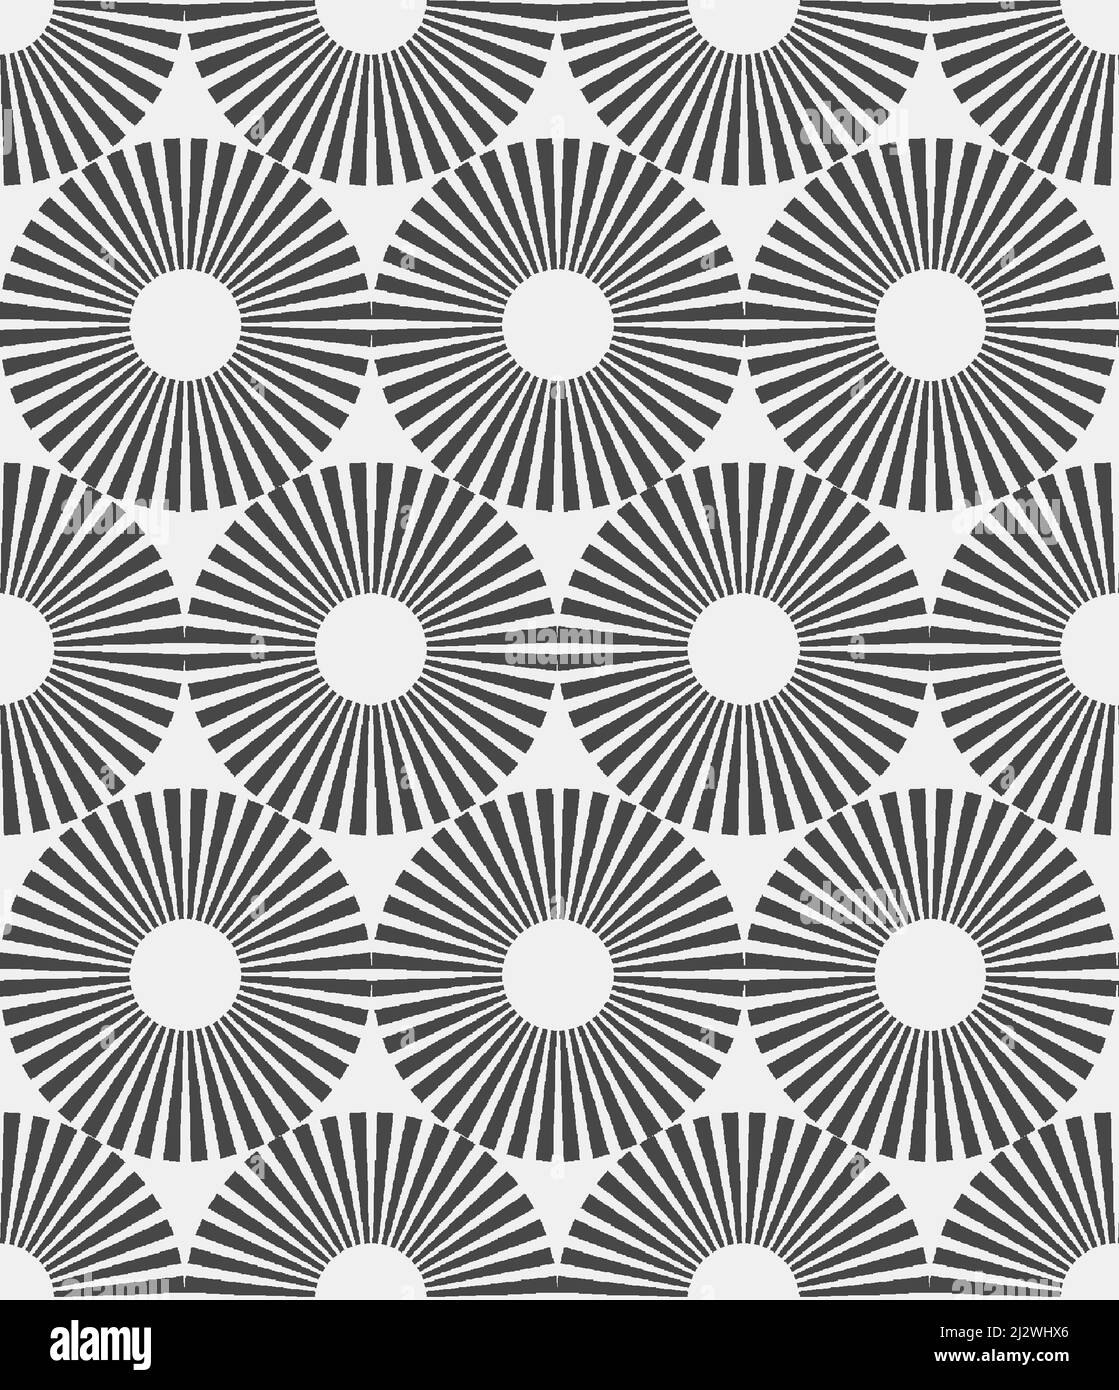 Seamless Illusion Graphical Pattern Illustration Stock Photo